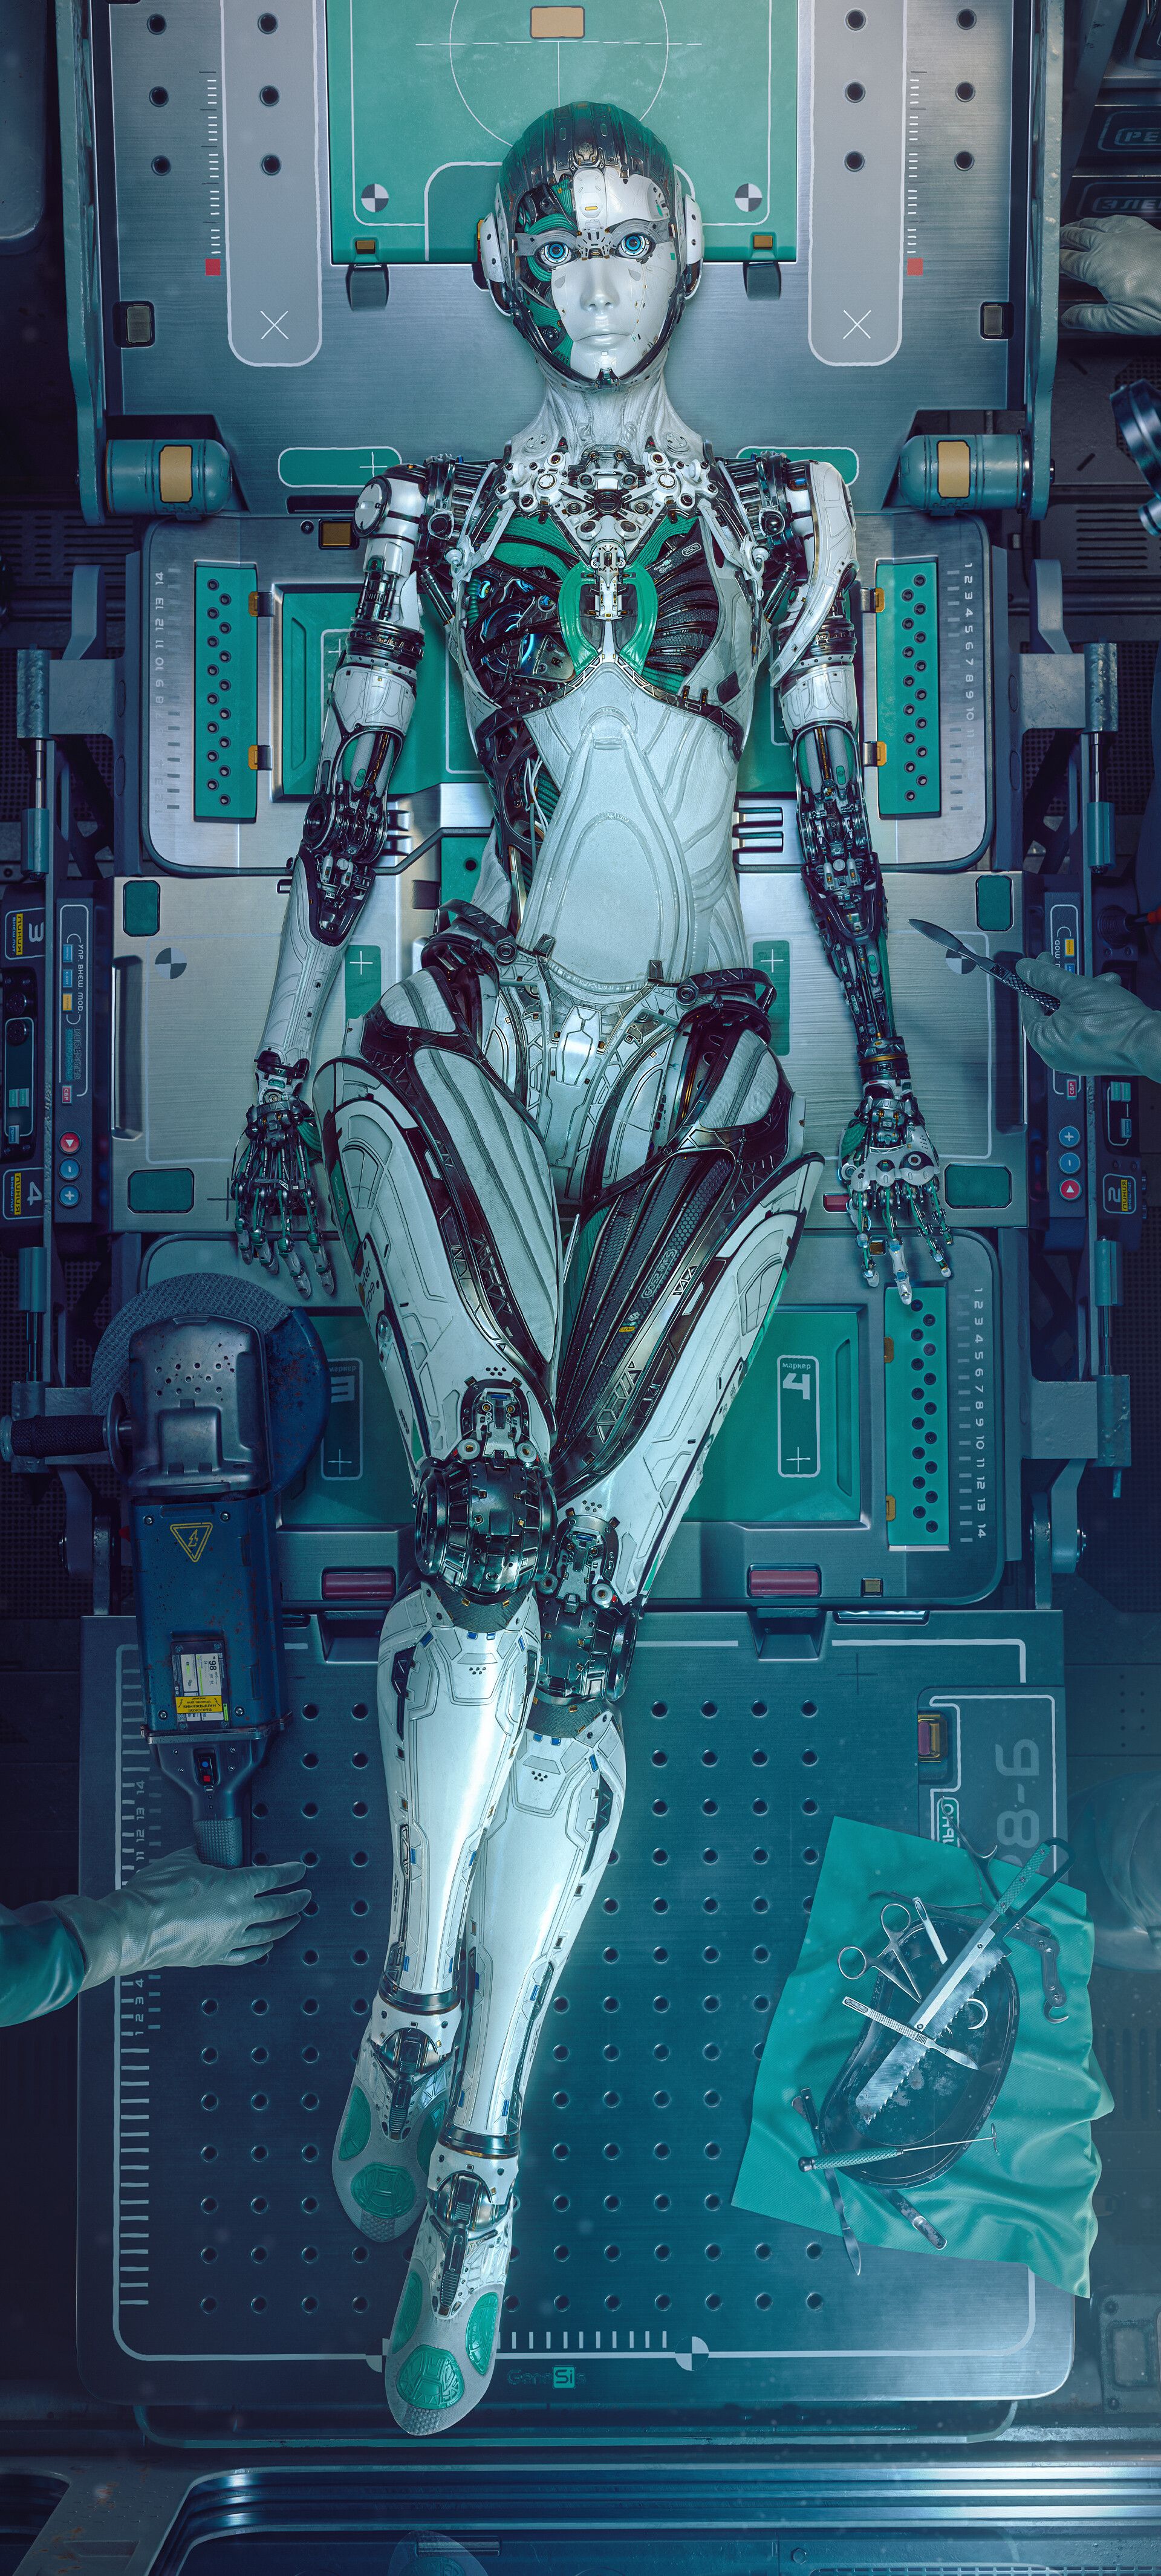 ArtStation, digital art, science fiction, robot, futuristic, machinex4260 Wallpaper.cc. Cyborgs art, Cyborg girl, Female cyborg